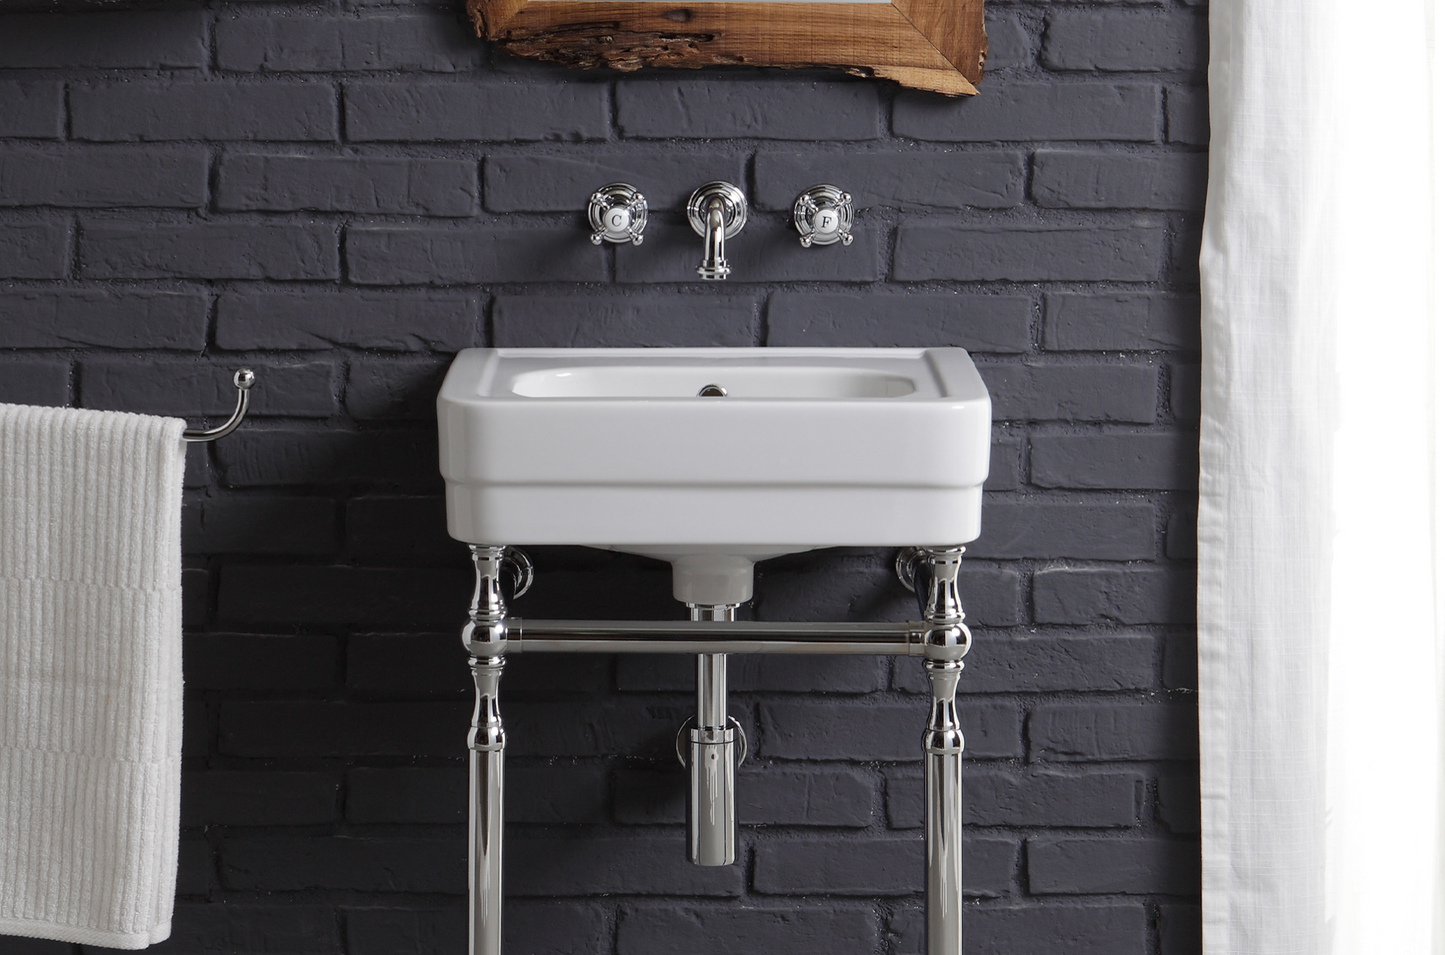 Vintage style built-in sink faucet